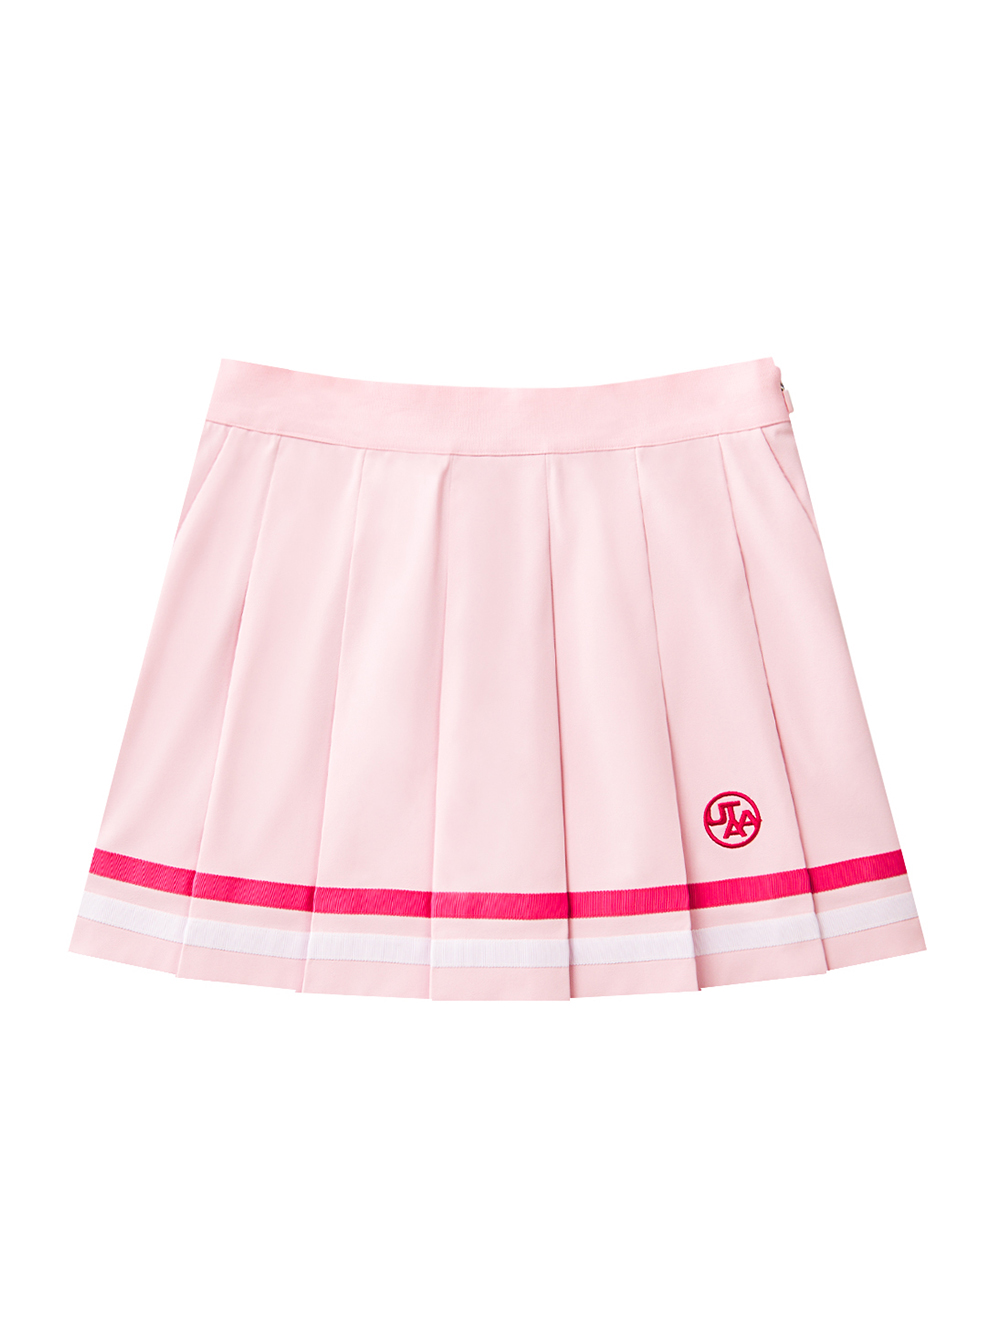 UTAA Dual Tape Mix Flare Skirt  : Light Pink (UD2SKF171LP)